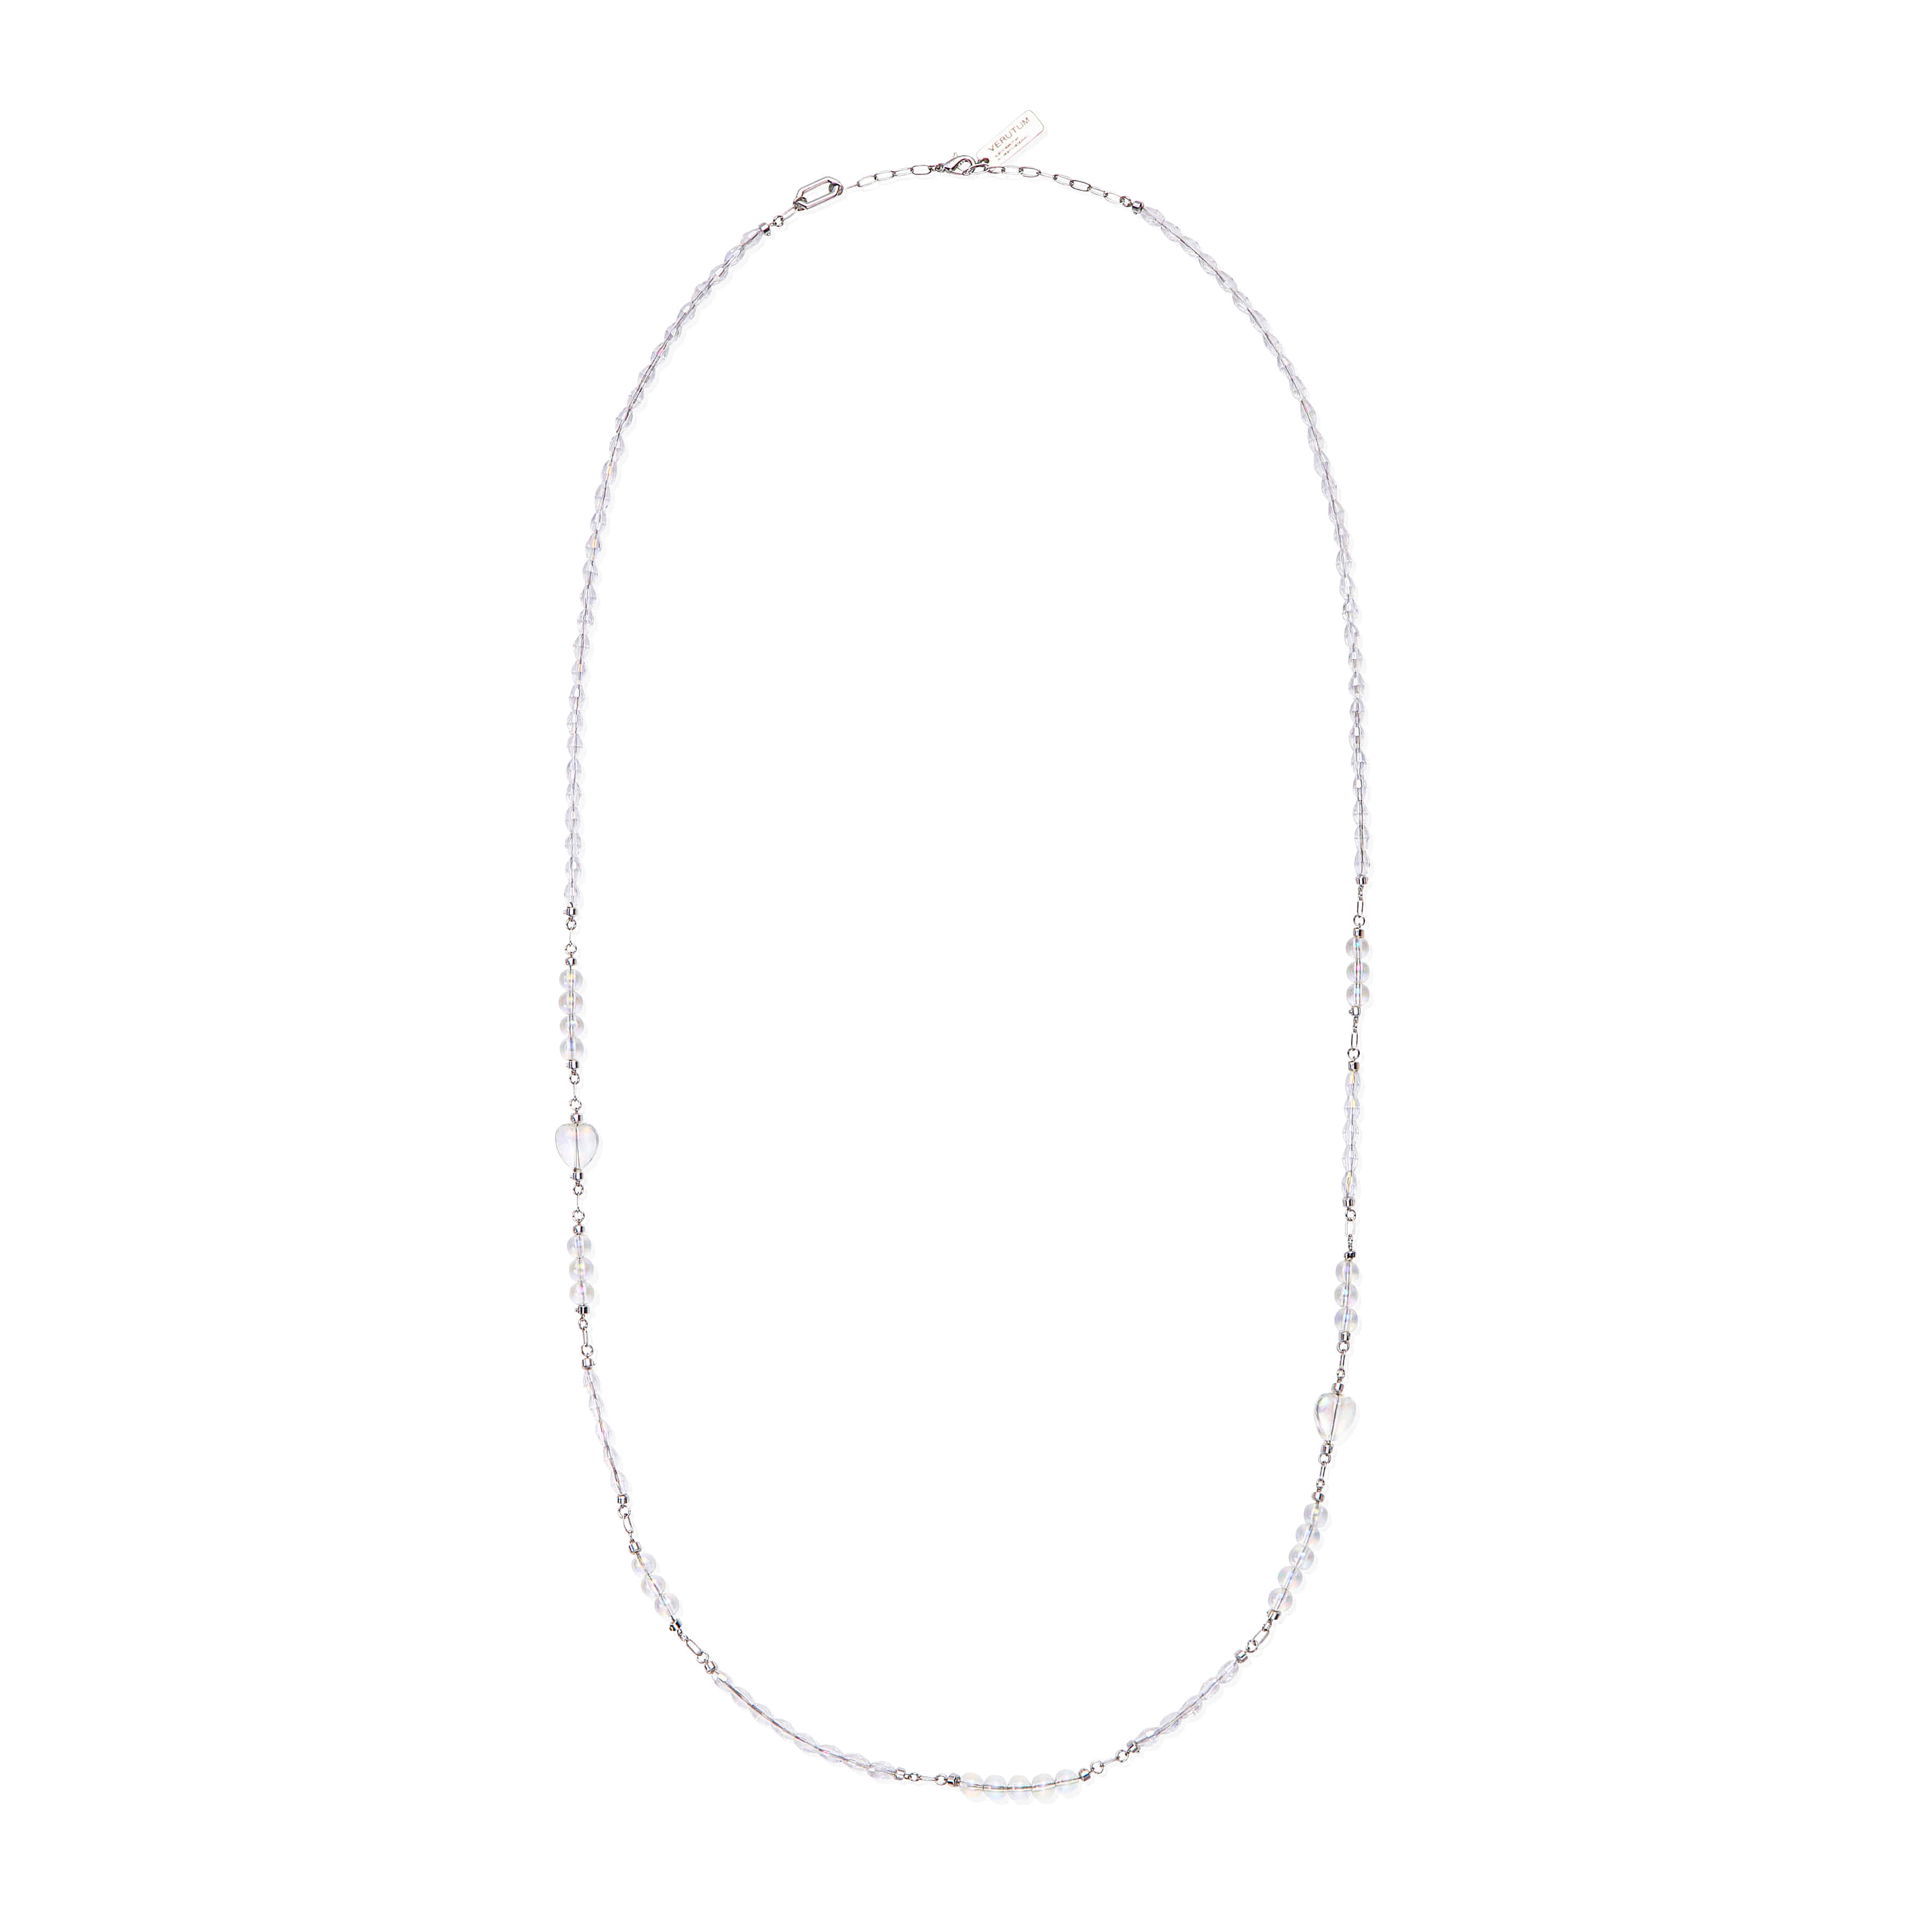 BRN019 : Multi Bead Long Necklace